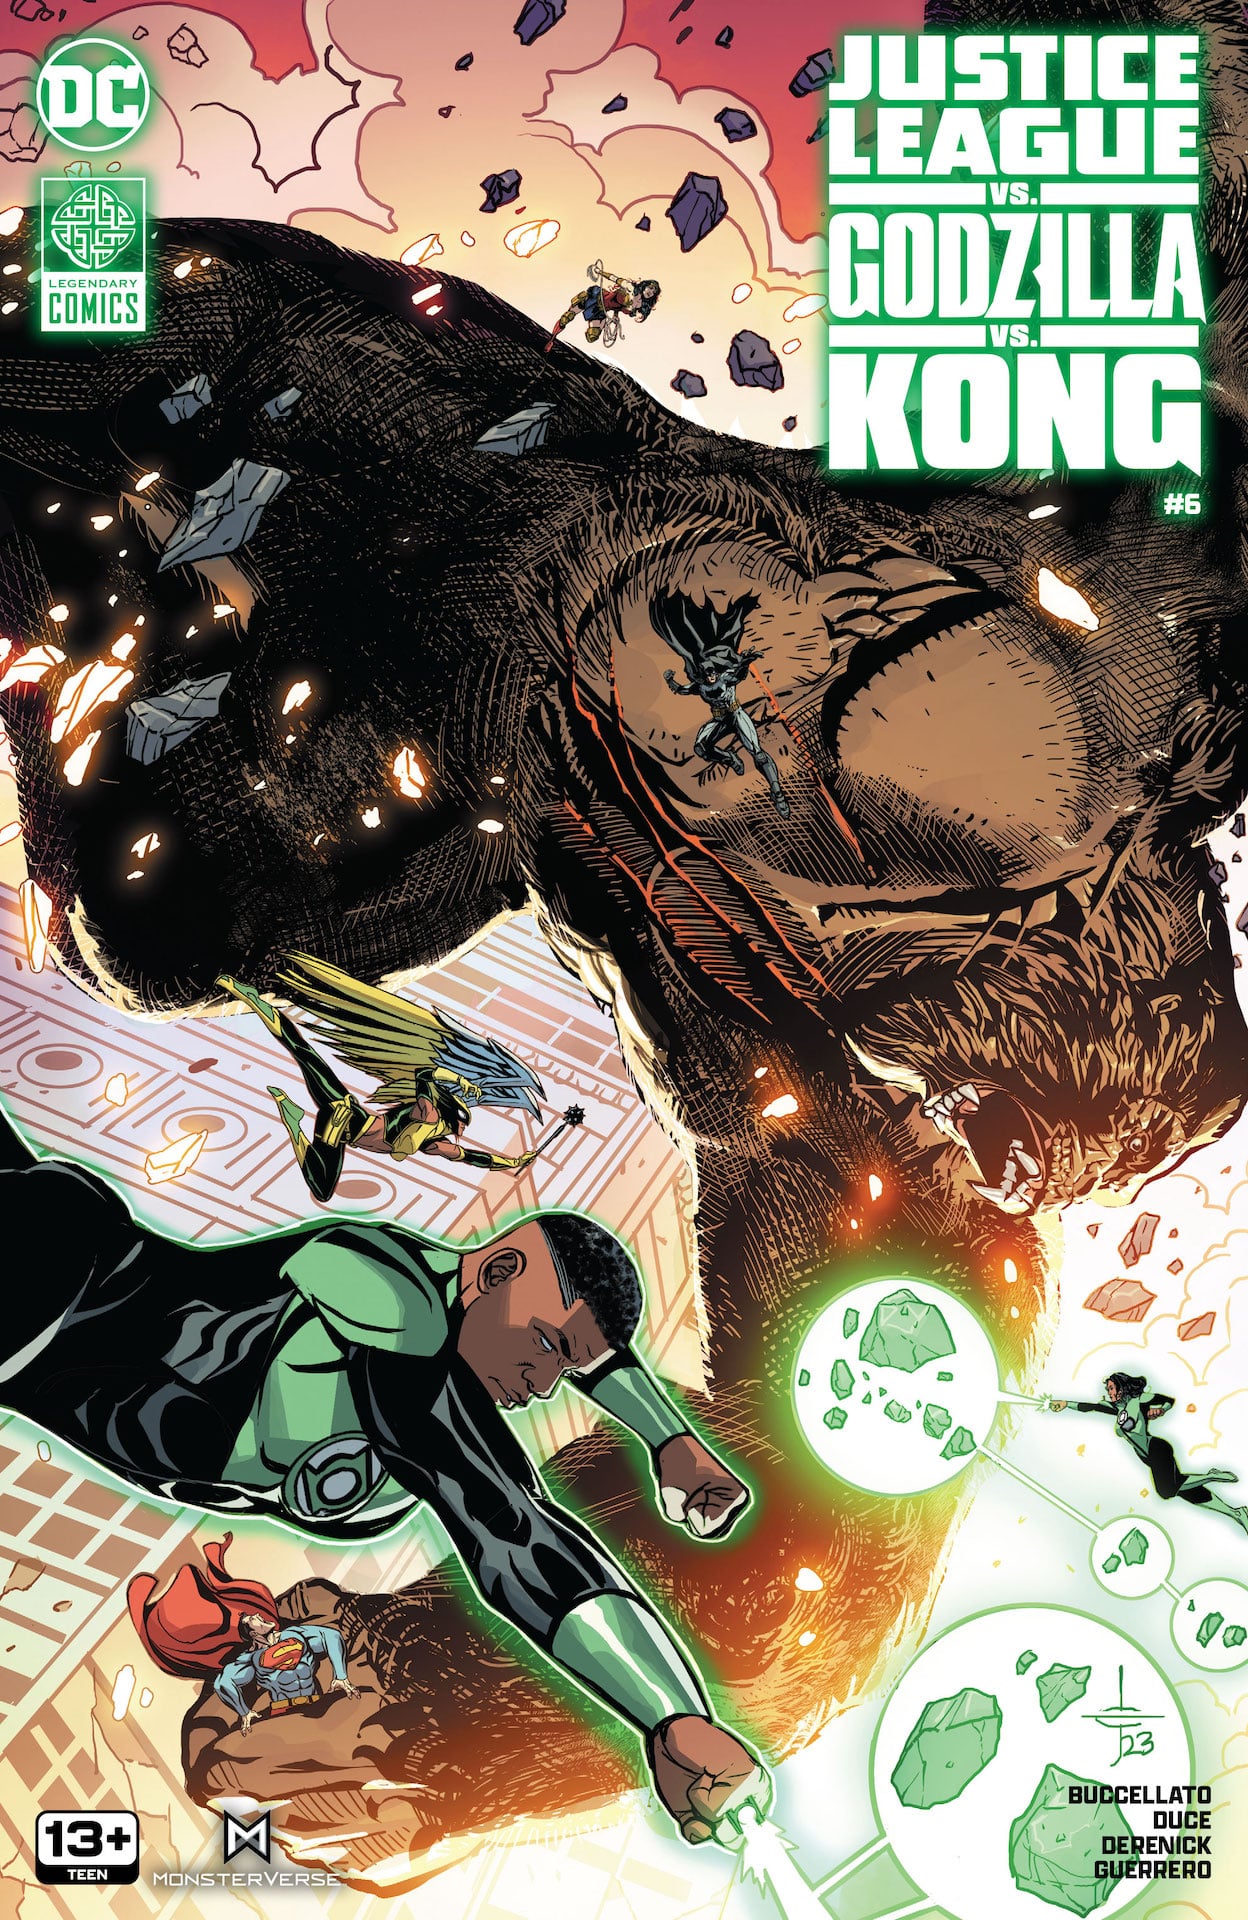 DC Preview: Justice League vs. Godzilla vs. Kong #6